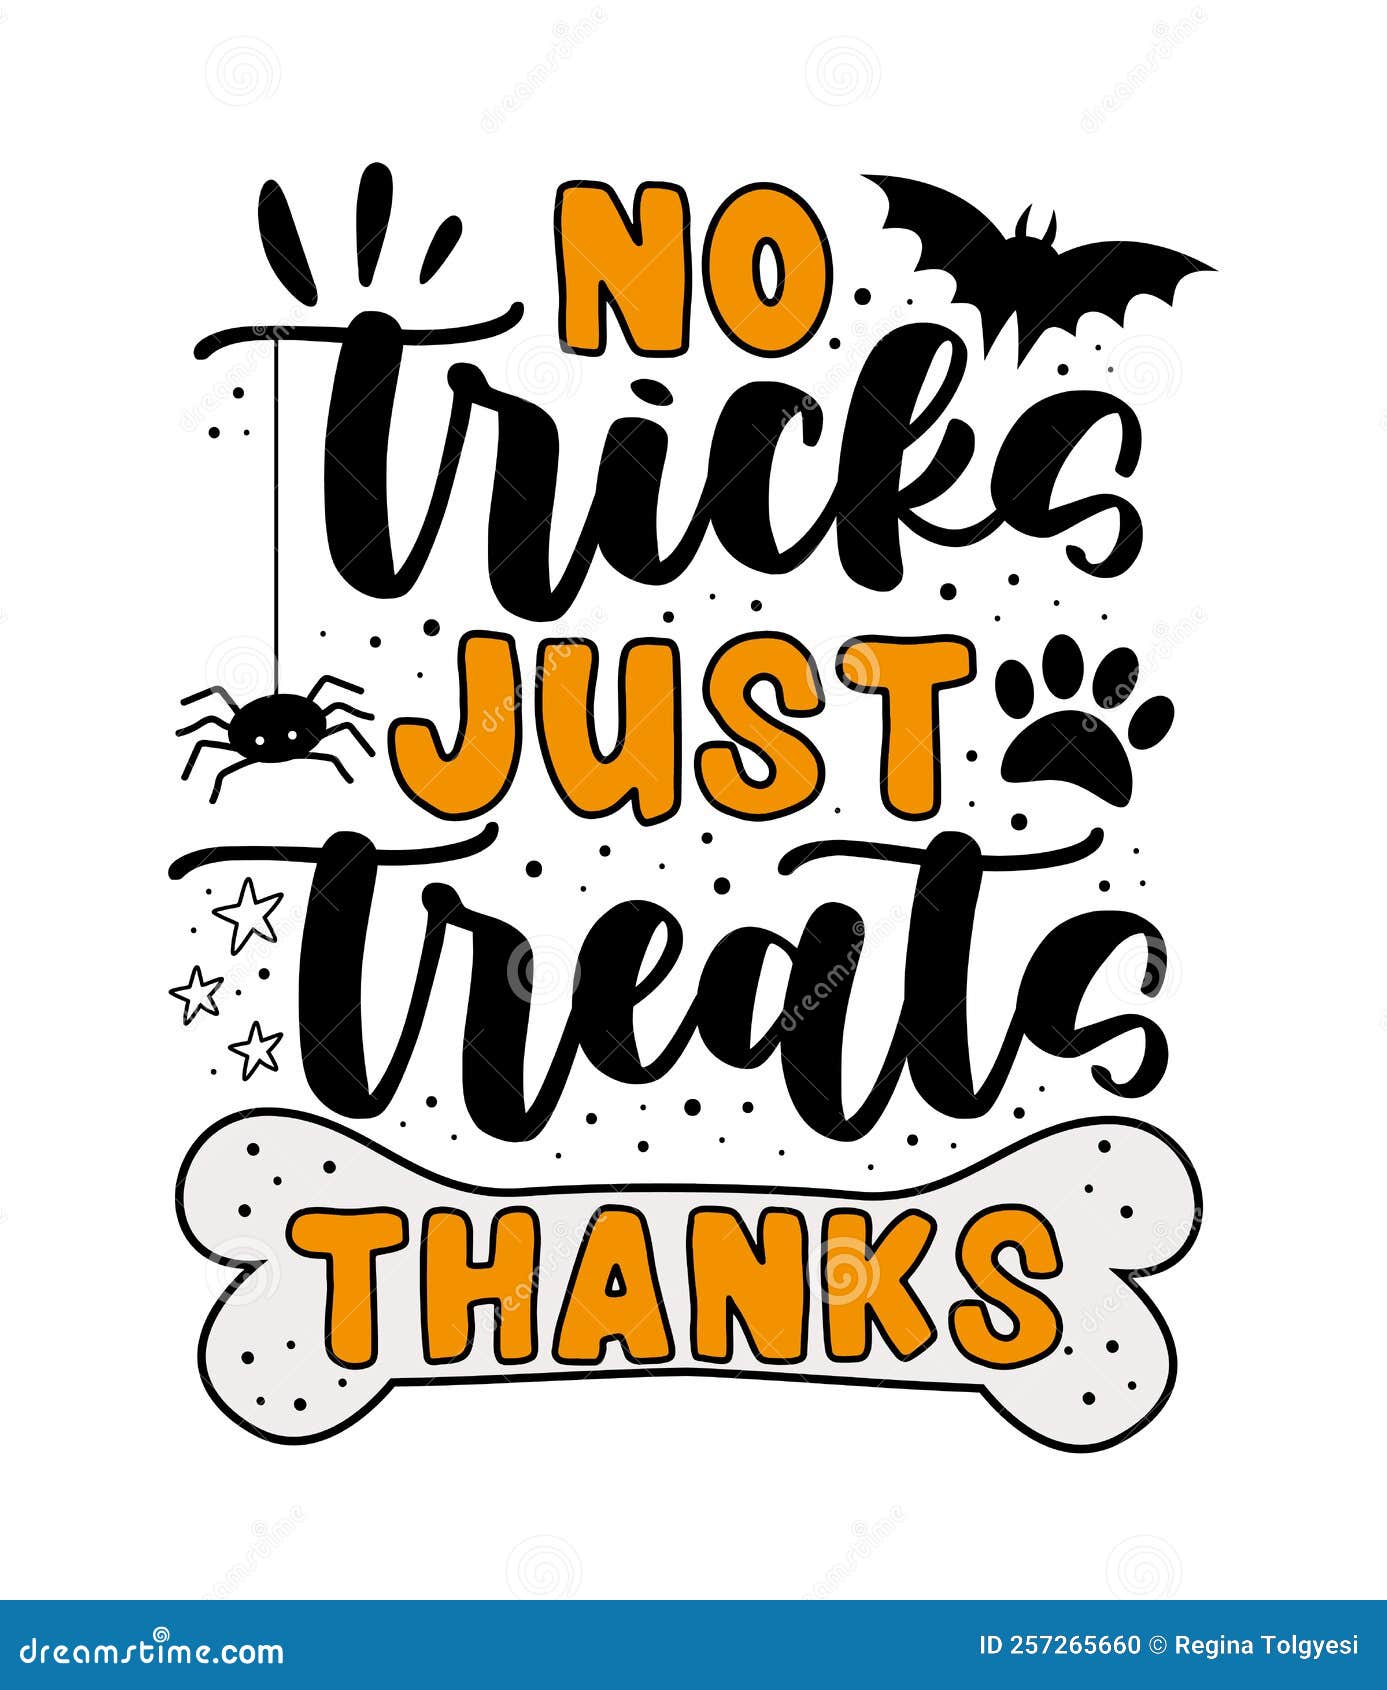 no tricks just treats, thanks - funny slogan with bone, spider, and bats.